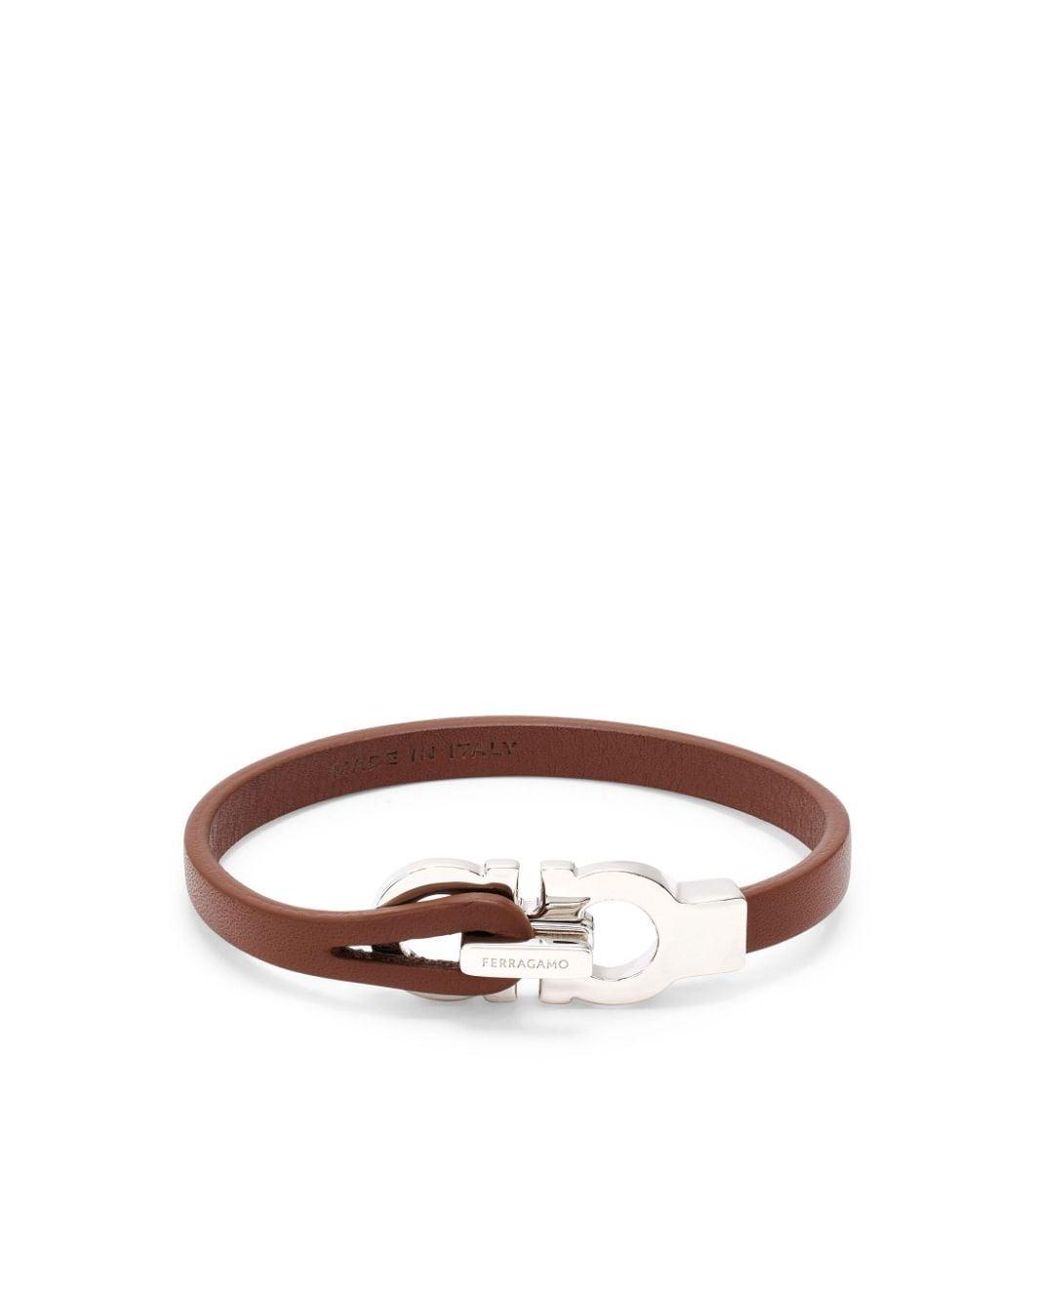 Ferragamo Gancini Leather Bracelet in Brown for Men | Lyst